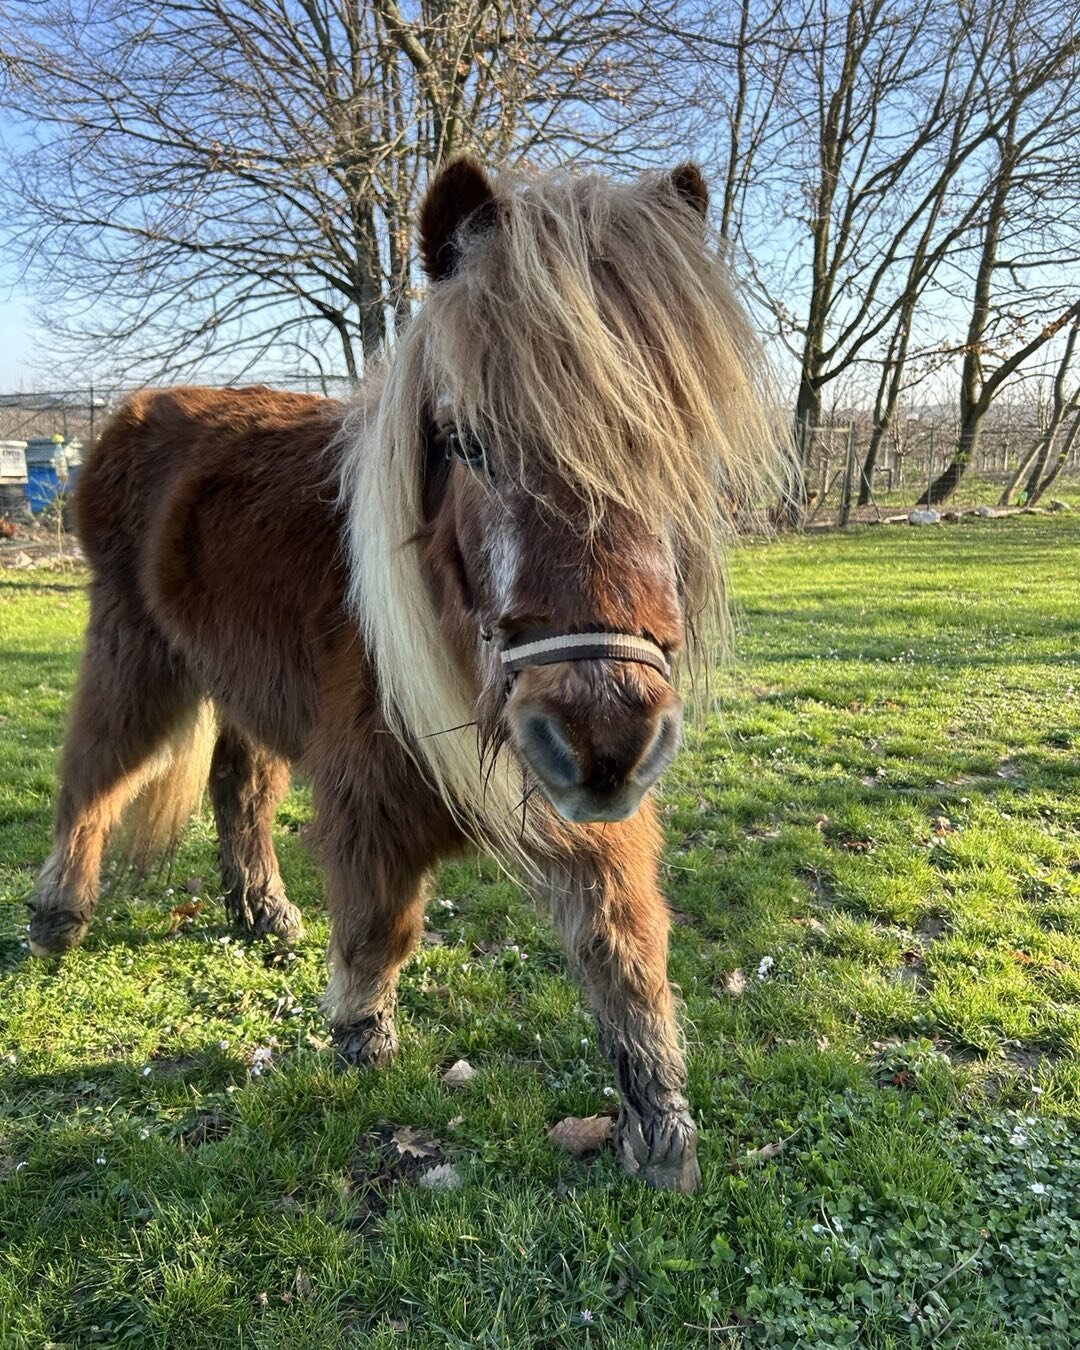 Polochon, the Shetland pony,enjoying the early spring sunshine